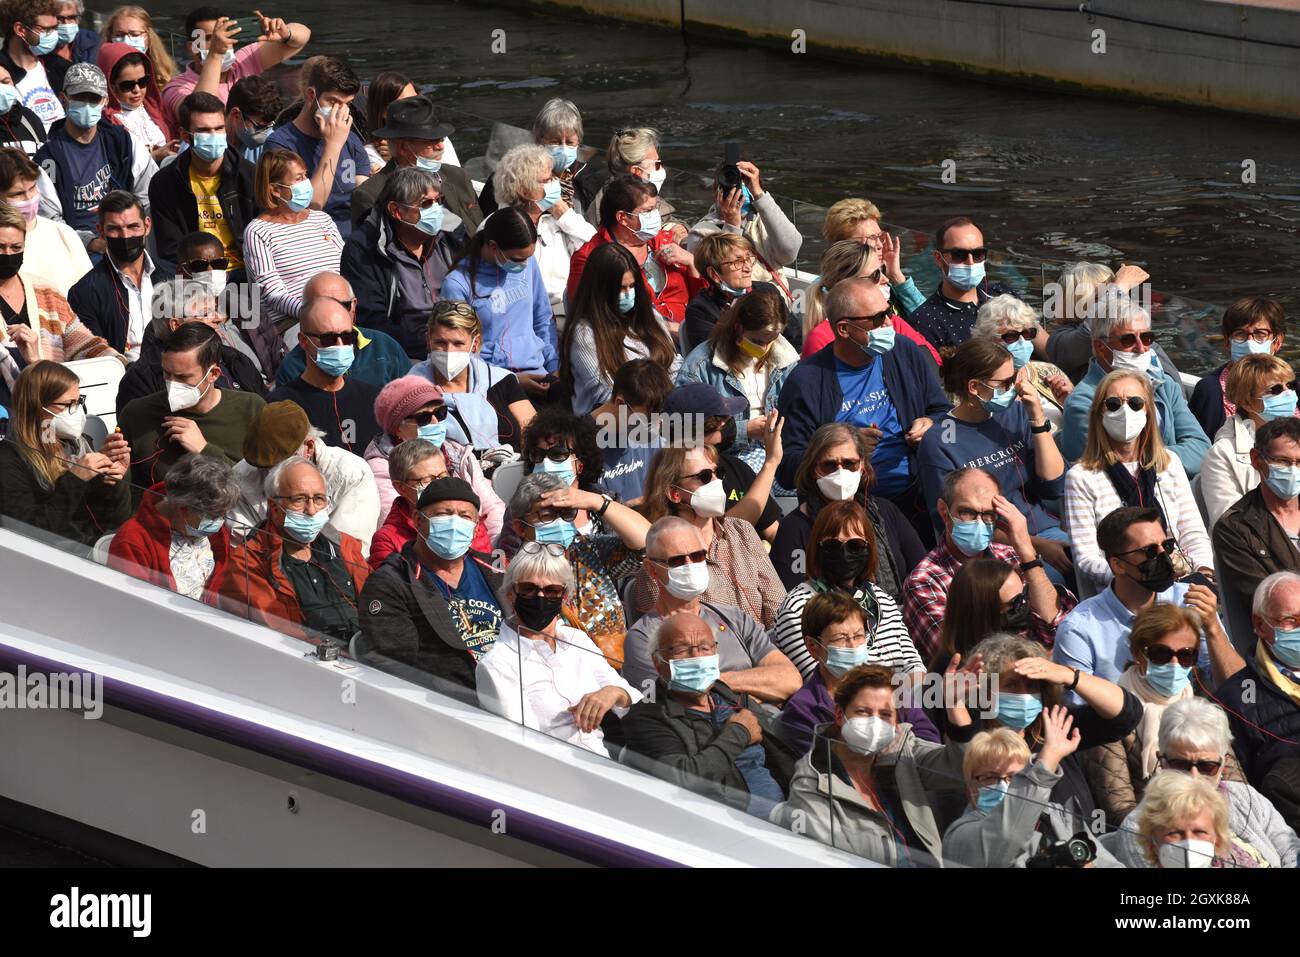 Tourists wearing Covid pandemic face masks on sight seeing boat  Strasbourg France 2021 coronavirus virus tourism holidays travel vacation passengers Stock Photo